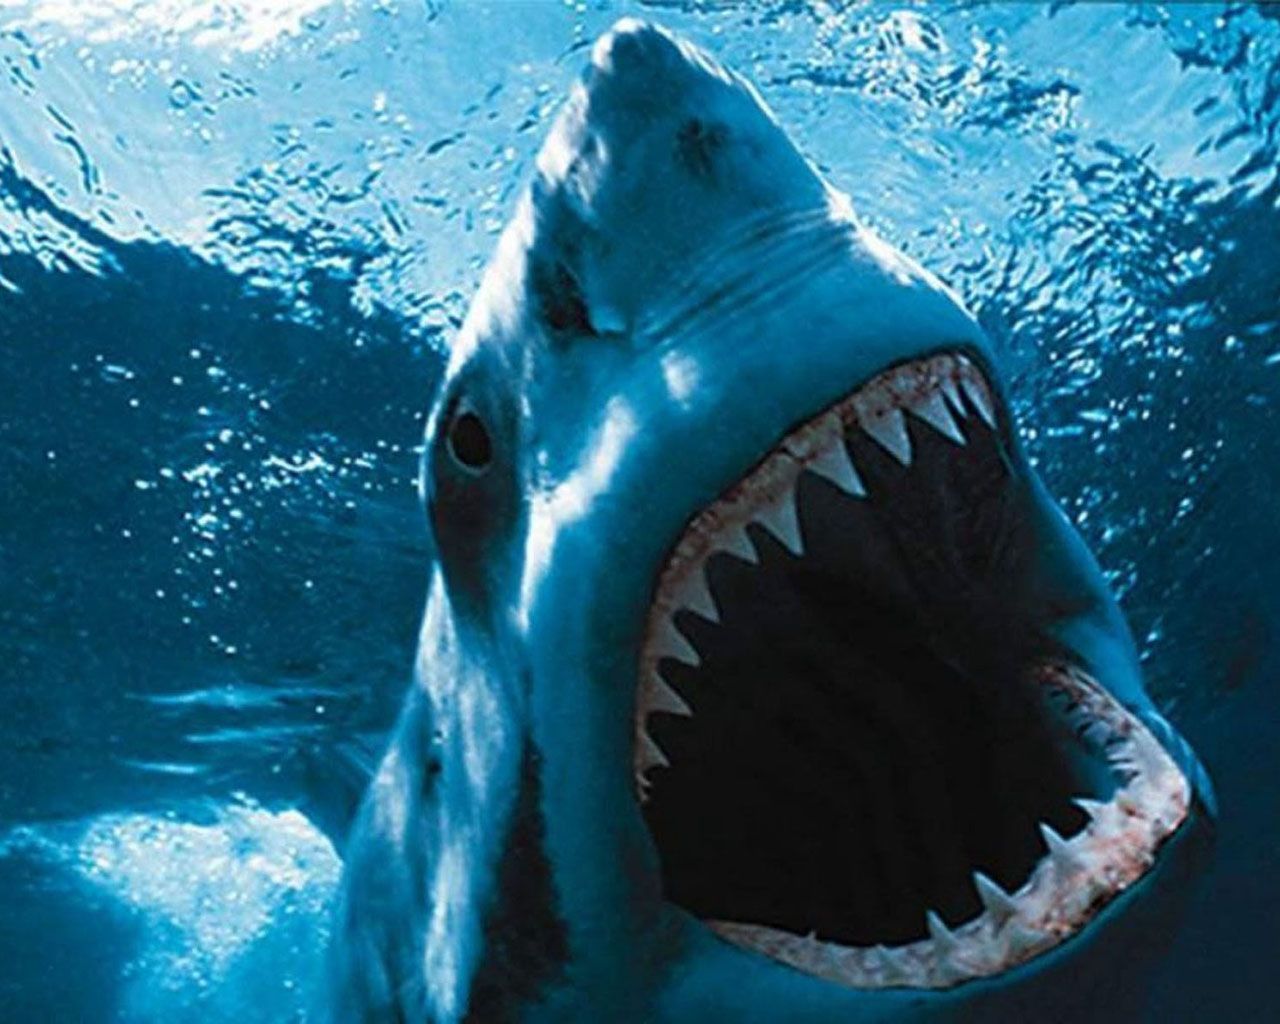 Shark Night 3D Movie 1280x1024 Wallpapers, 1280x1024 Wallpapers ...